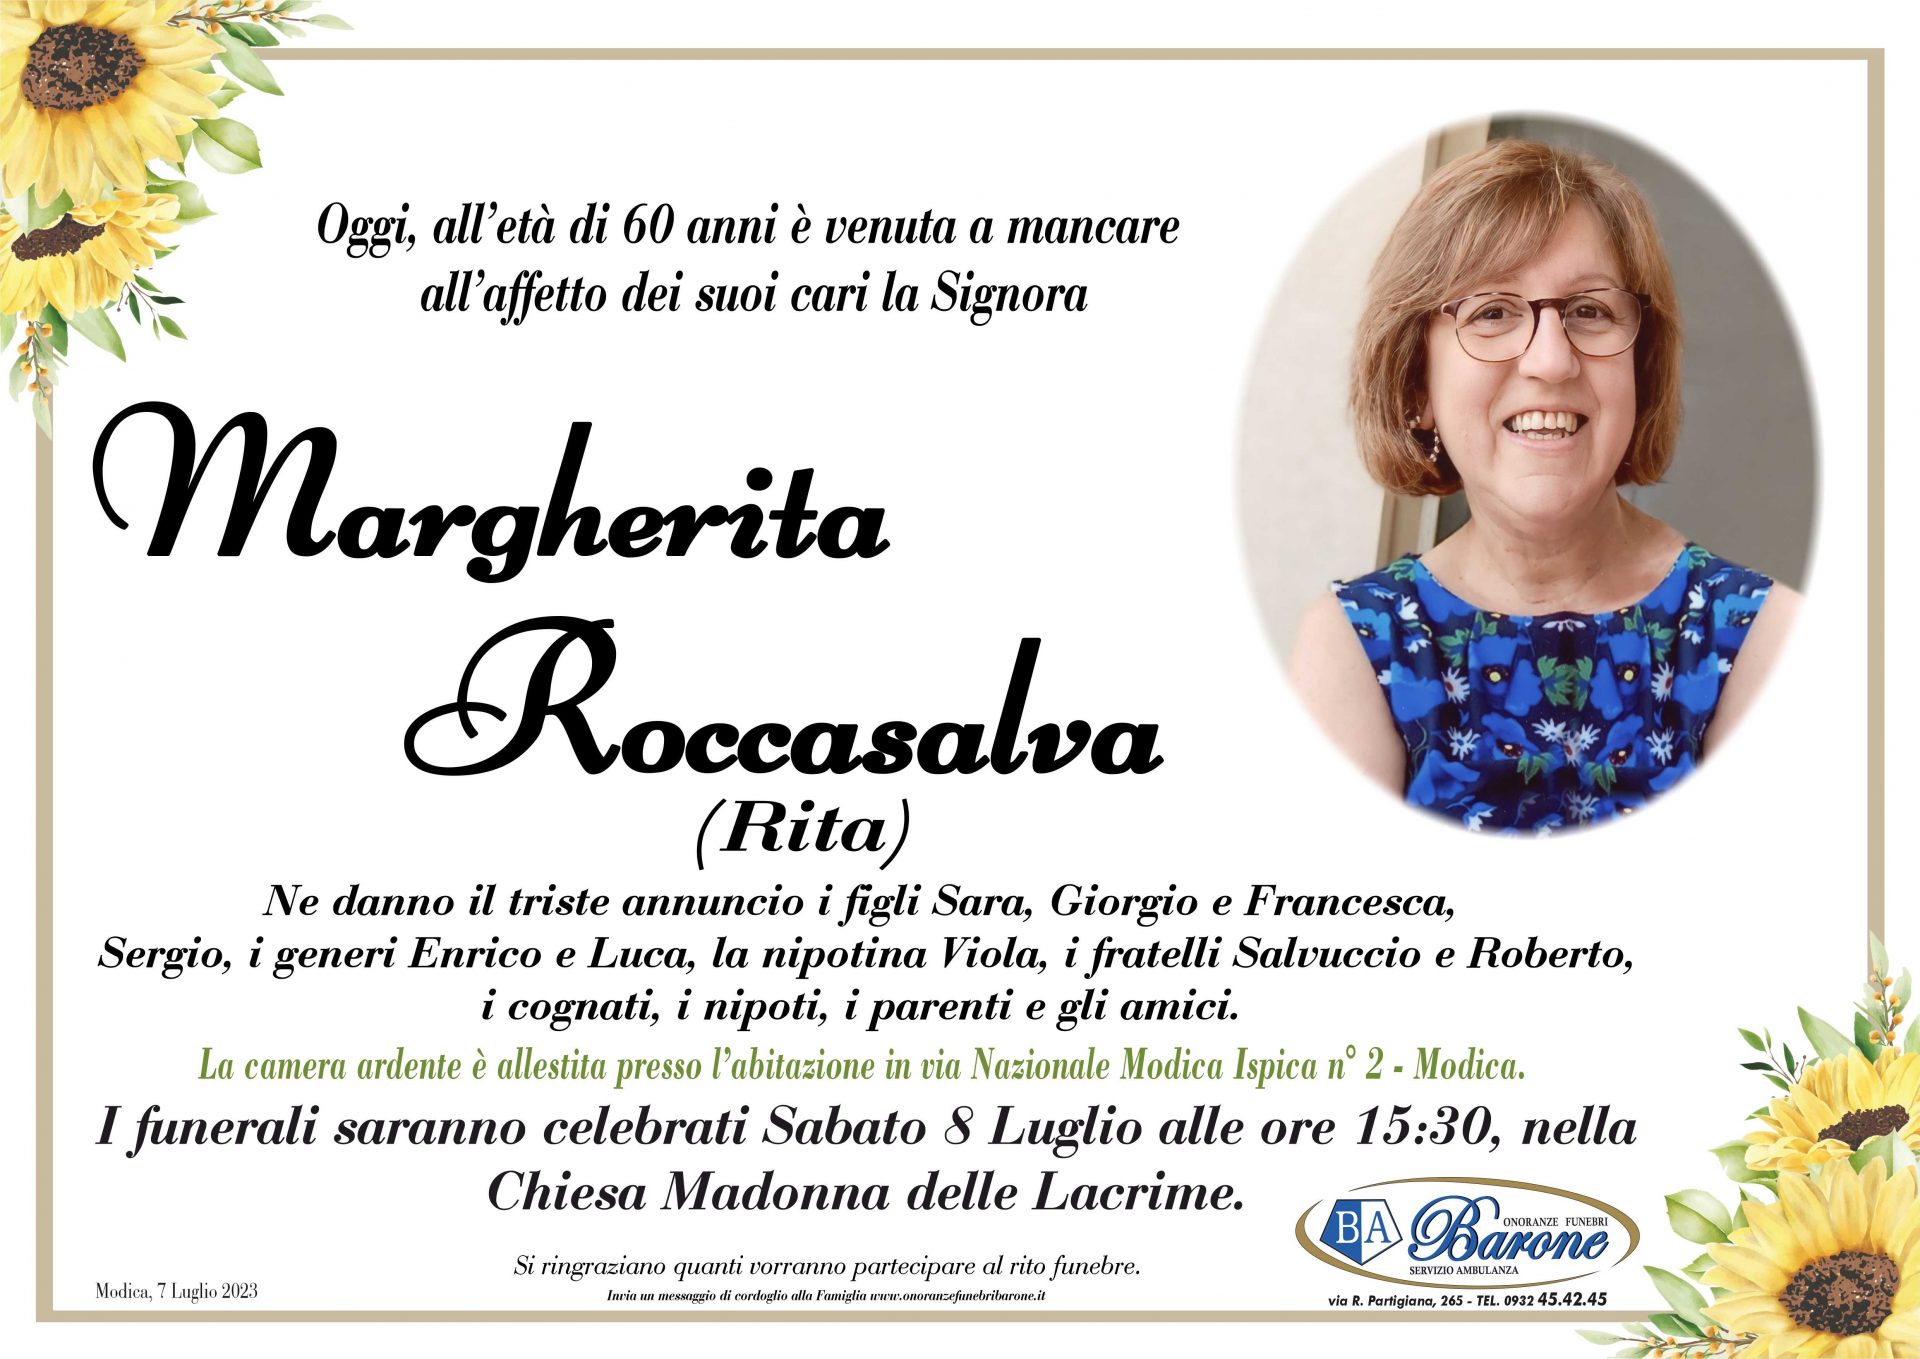 Margherita Roccasalva